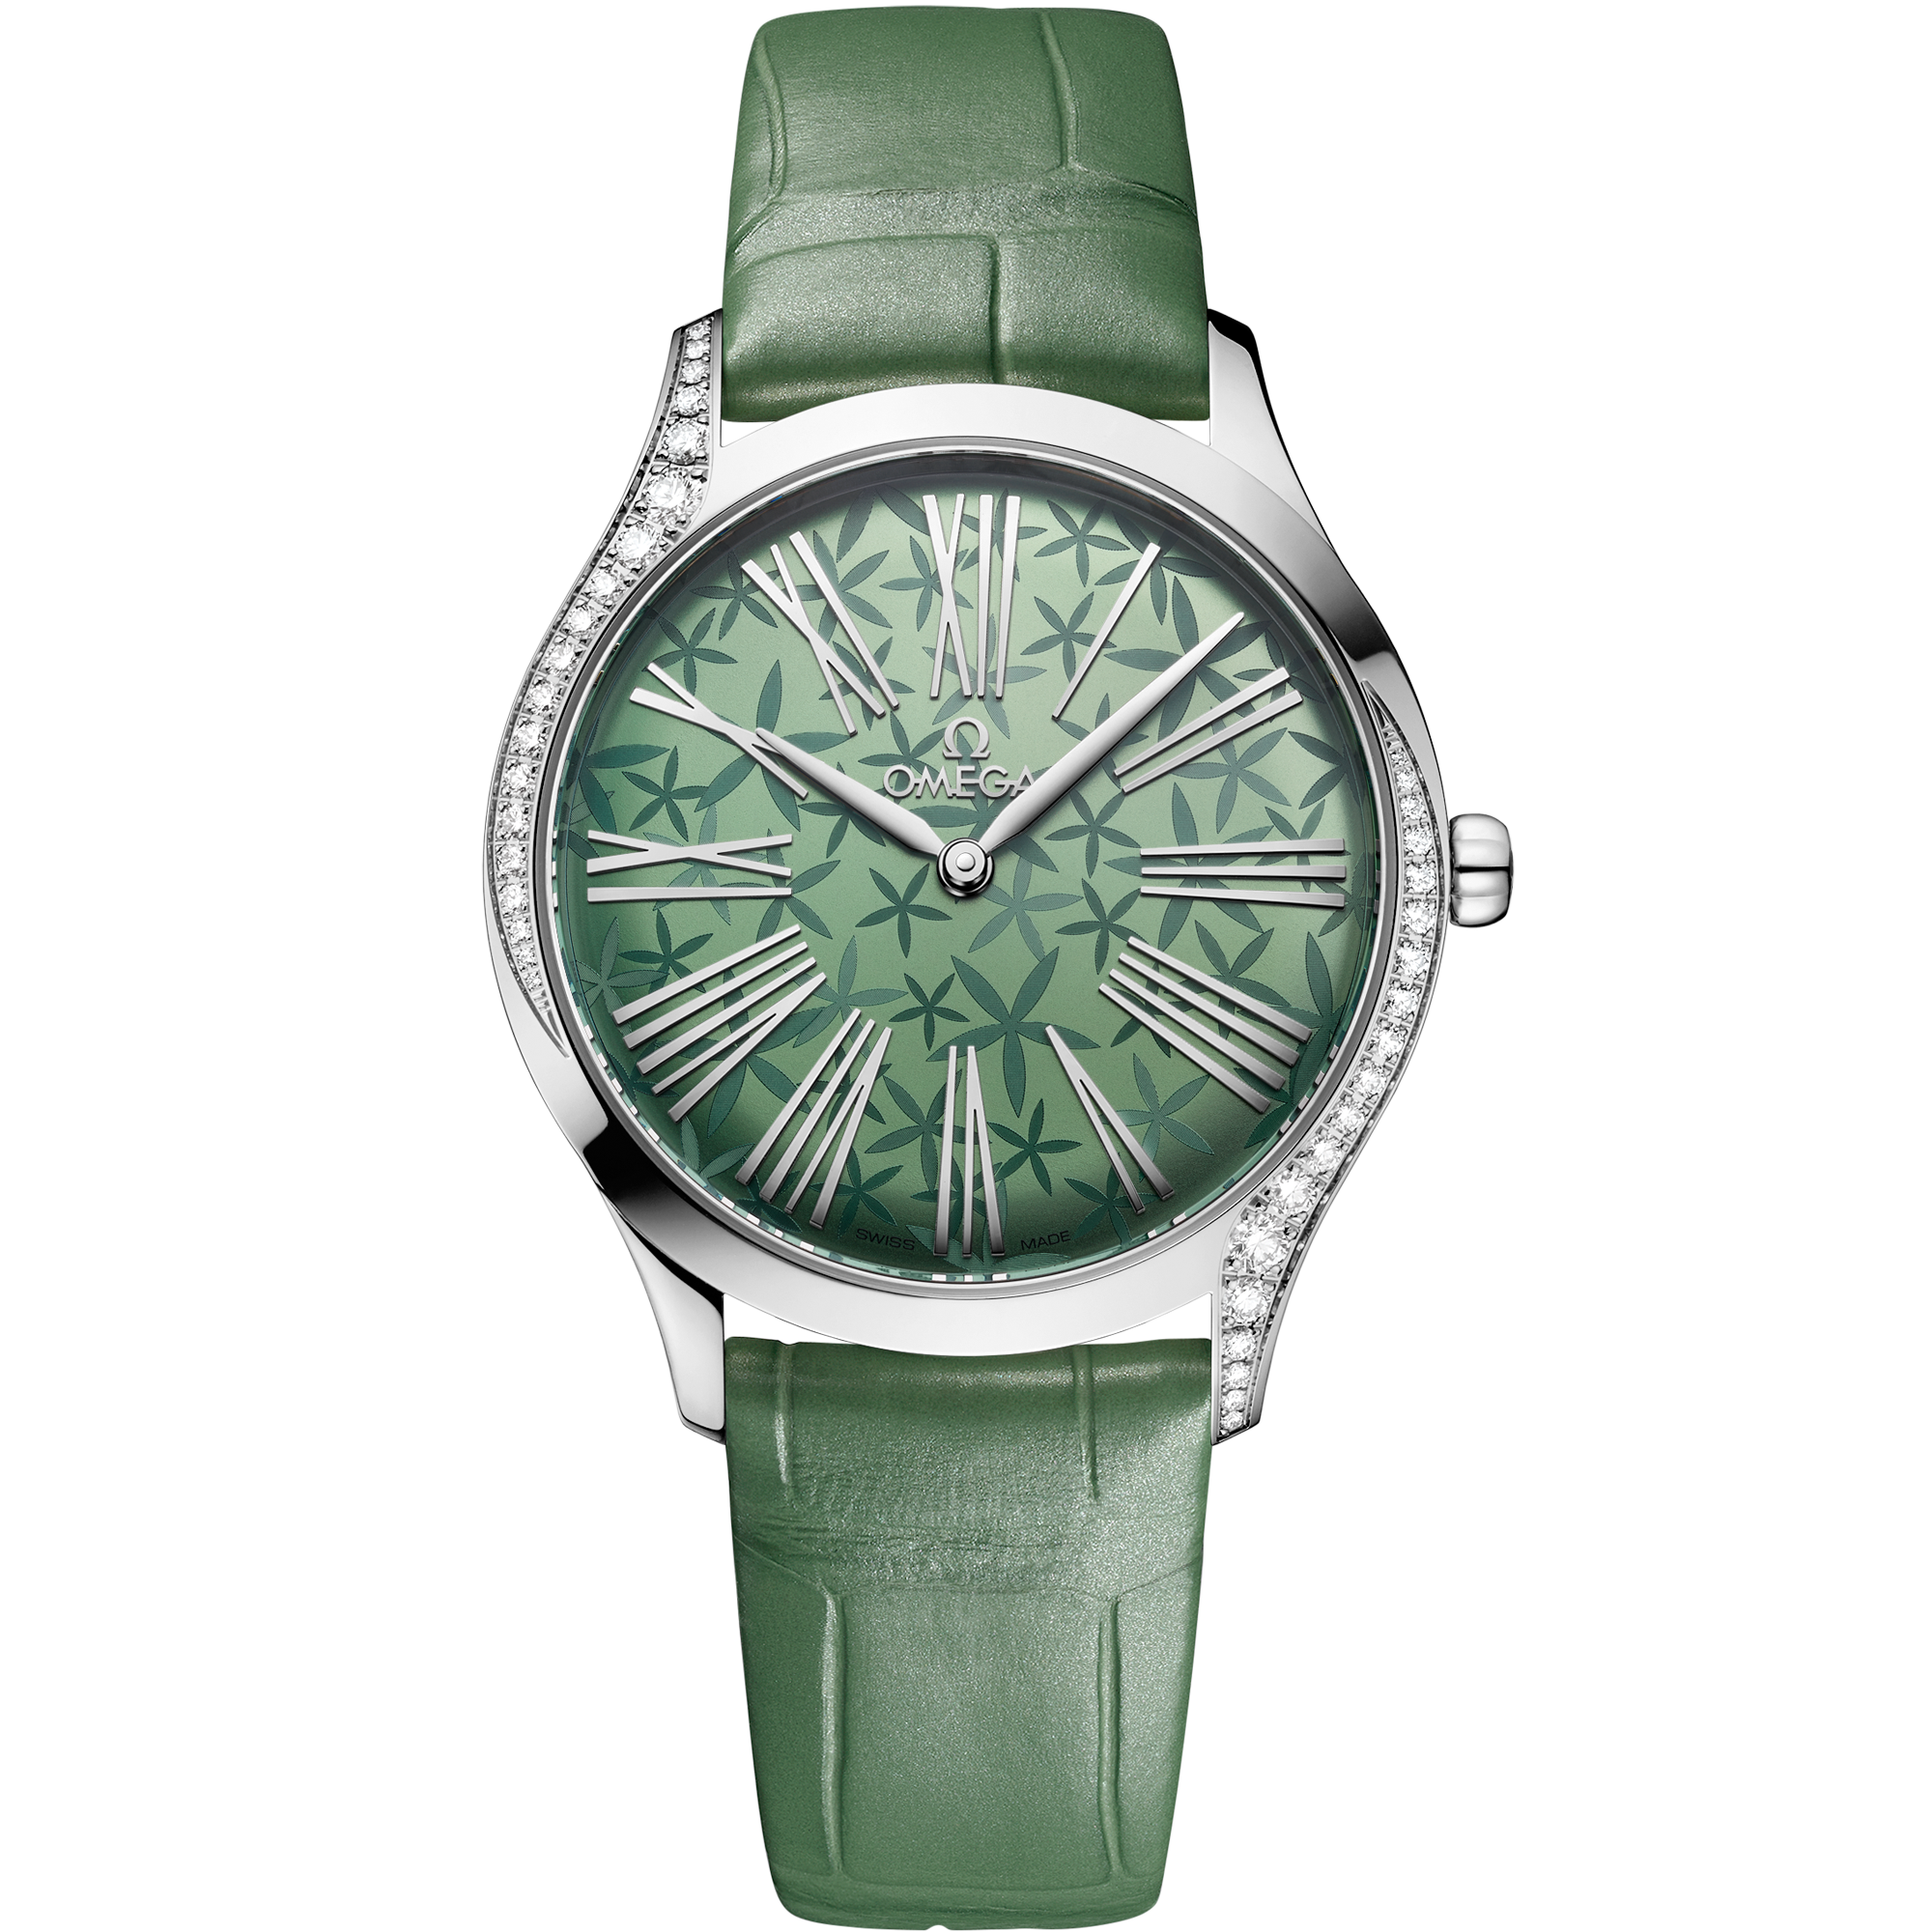 Orologio con quadrante Verde e cassa in Acciaio corredato di De Ville Trésor 36 mm, Acciaio su Alligatore - 428.18.36.60.10.002 - Alligatore bracelet